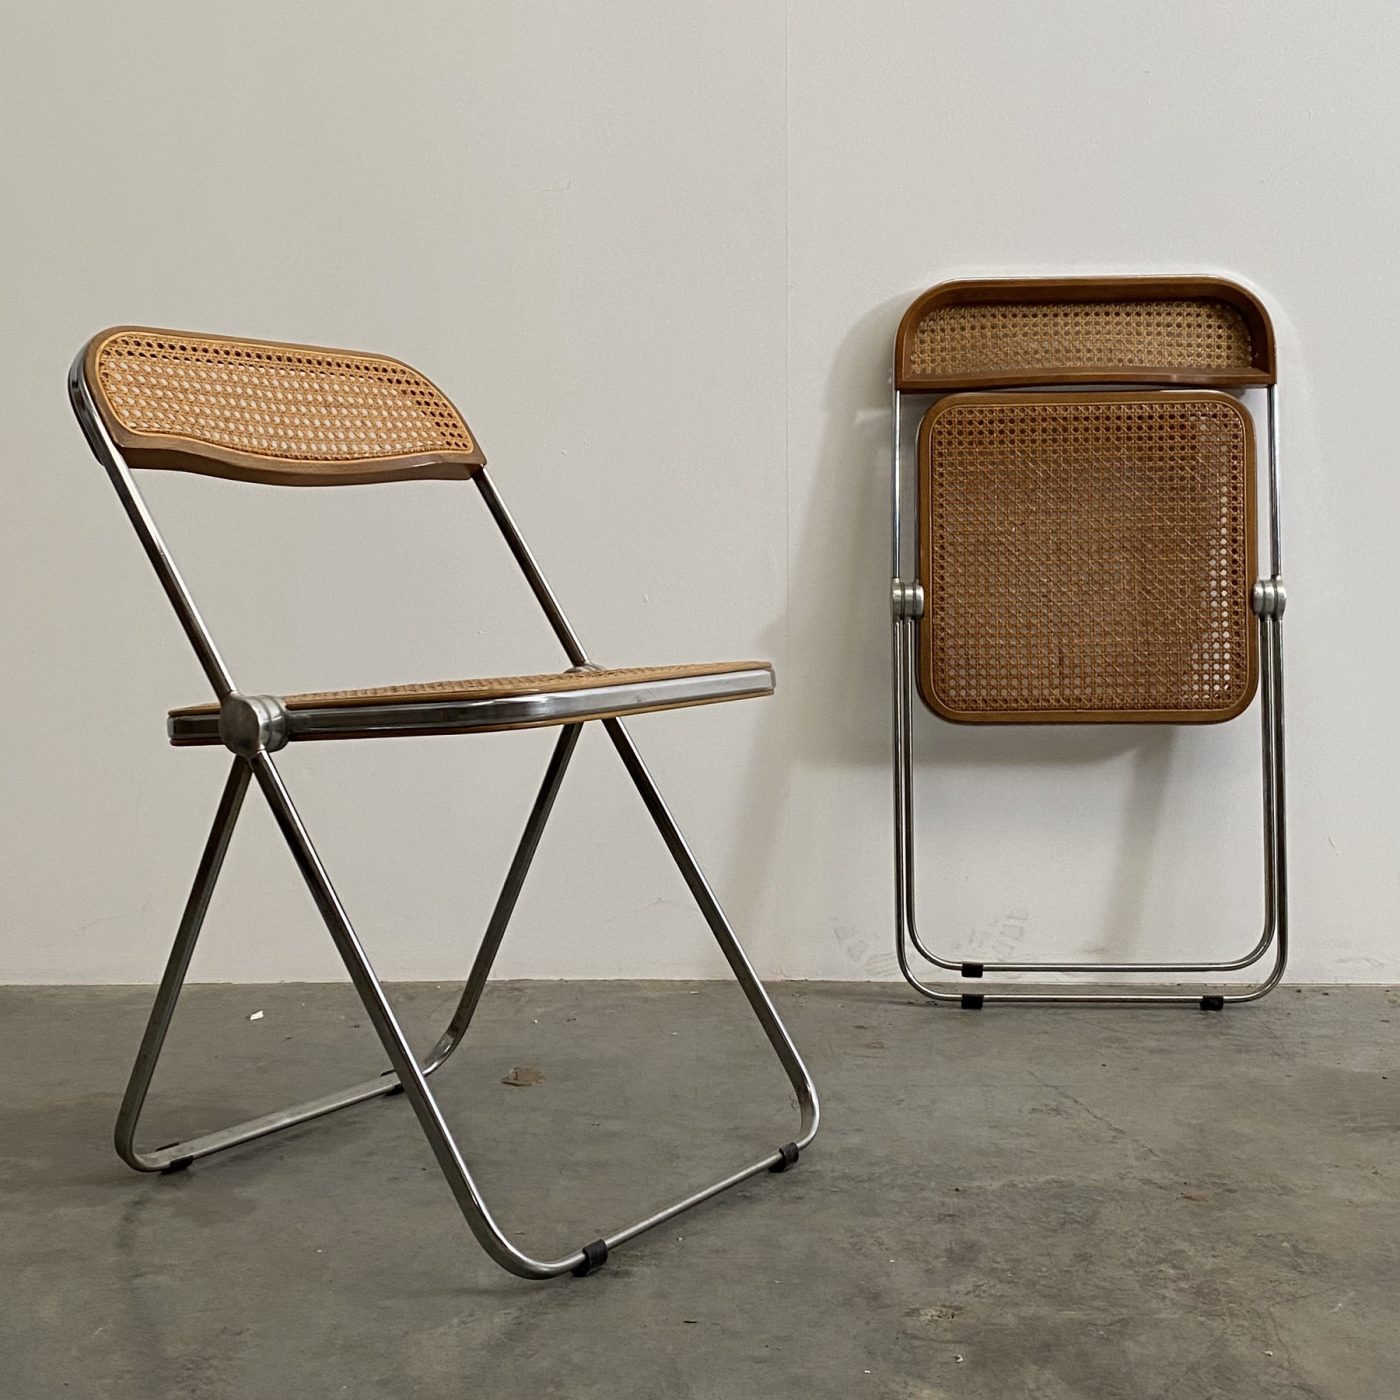 objet-vagabond-folding-chairs0001